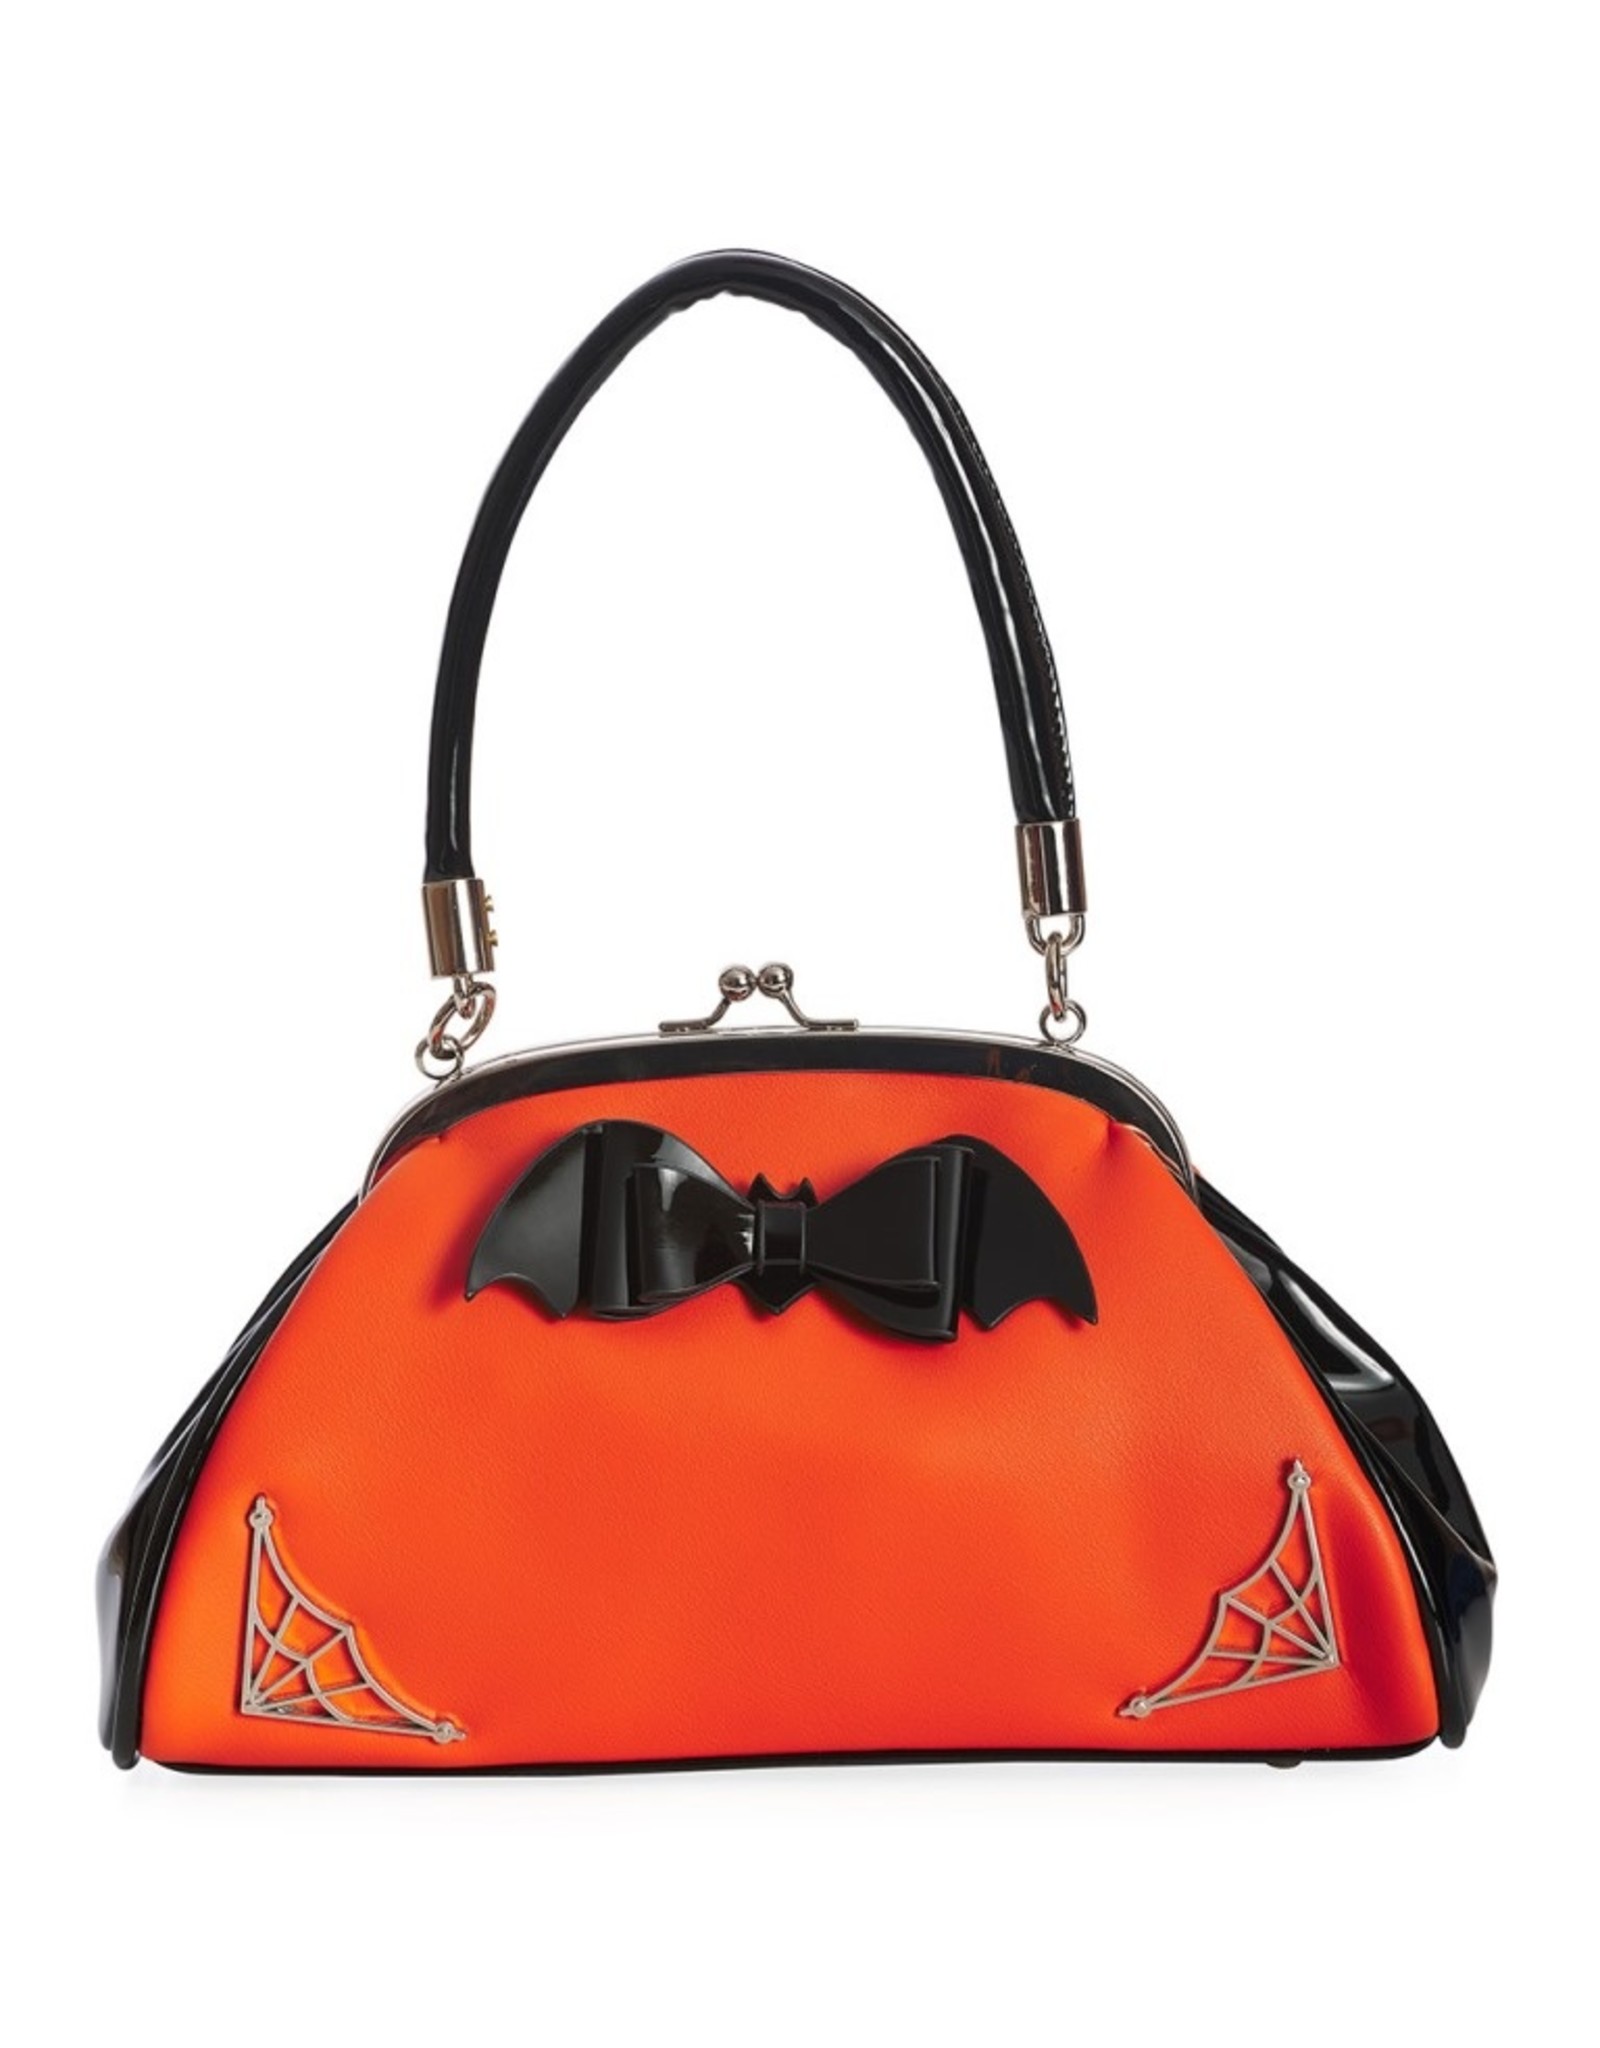 Banned Retro bags  Vintage bags - Old Hallows Eve Handbag Orange-Black